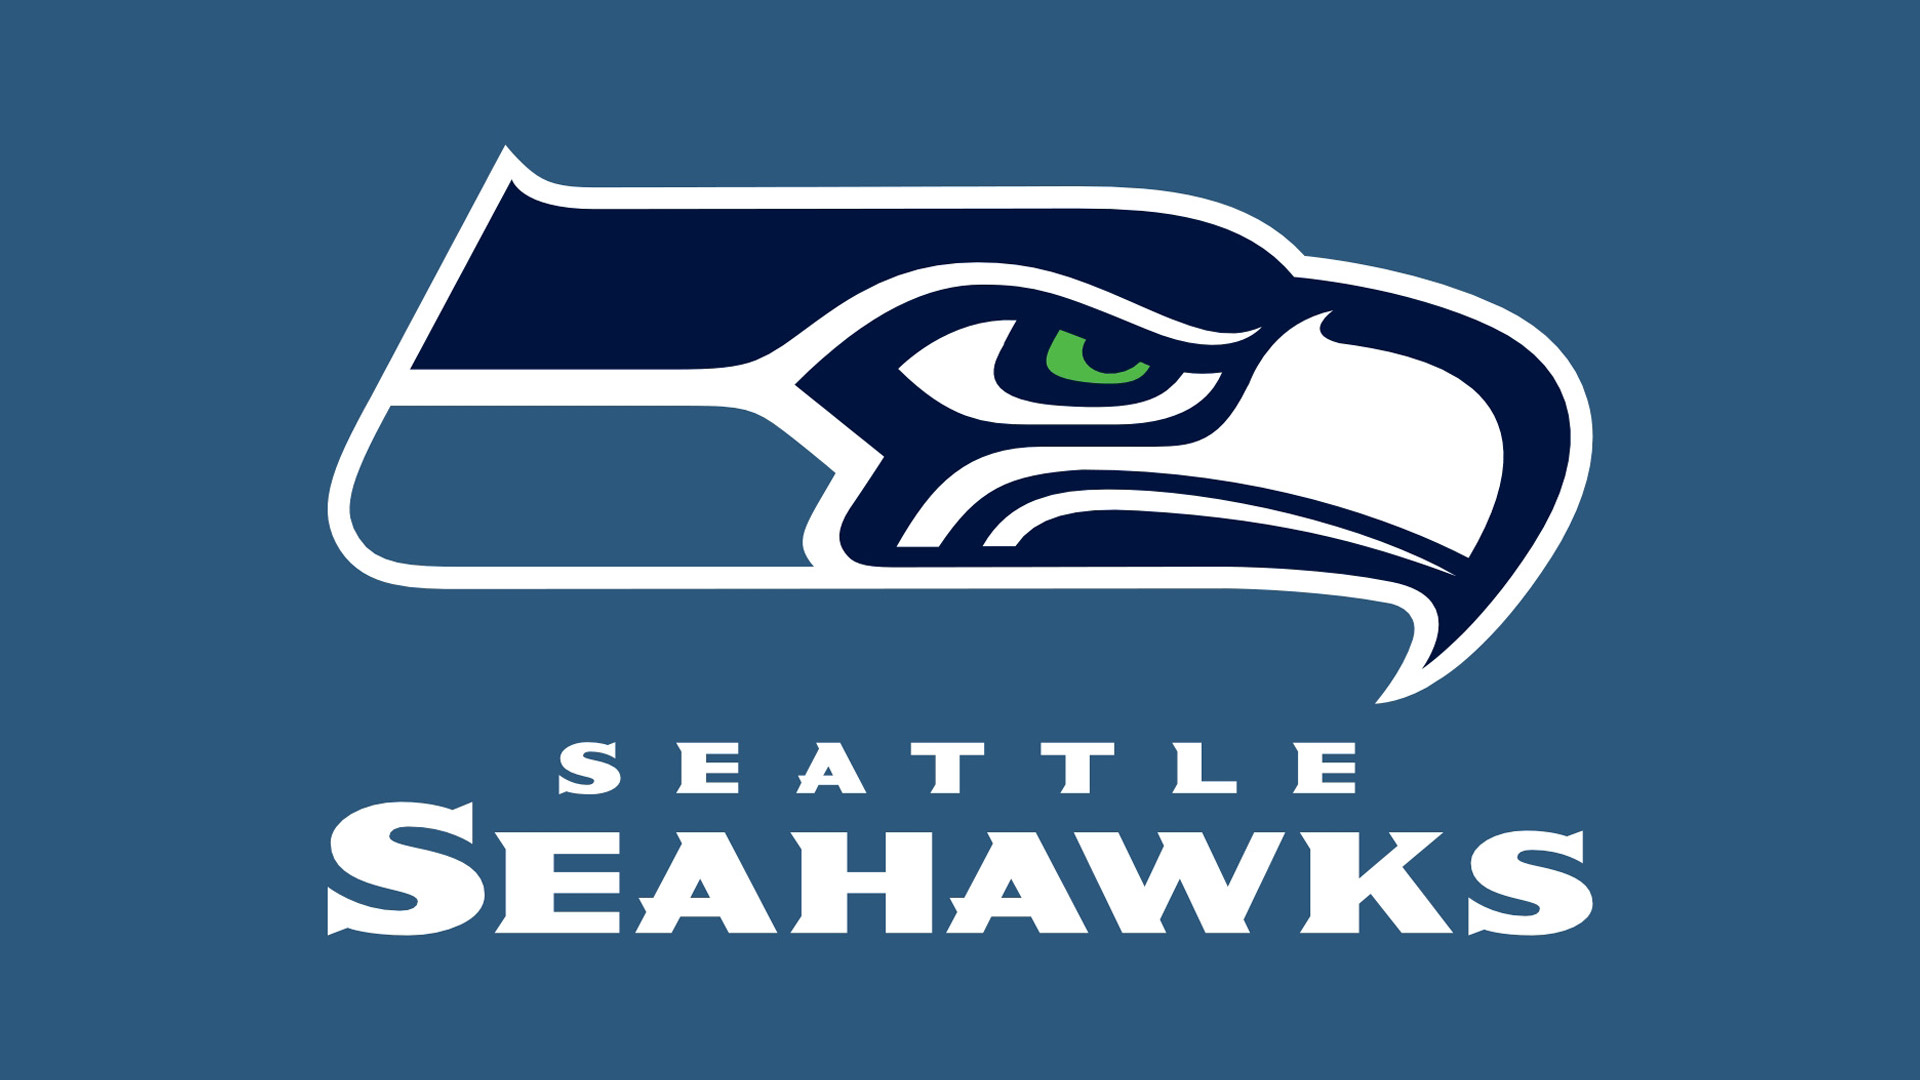  Resolution Words Seattle Seahawks Logos wallpapers HD free